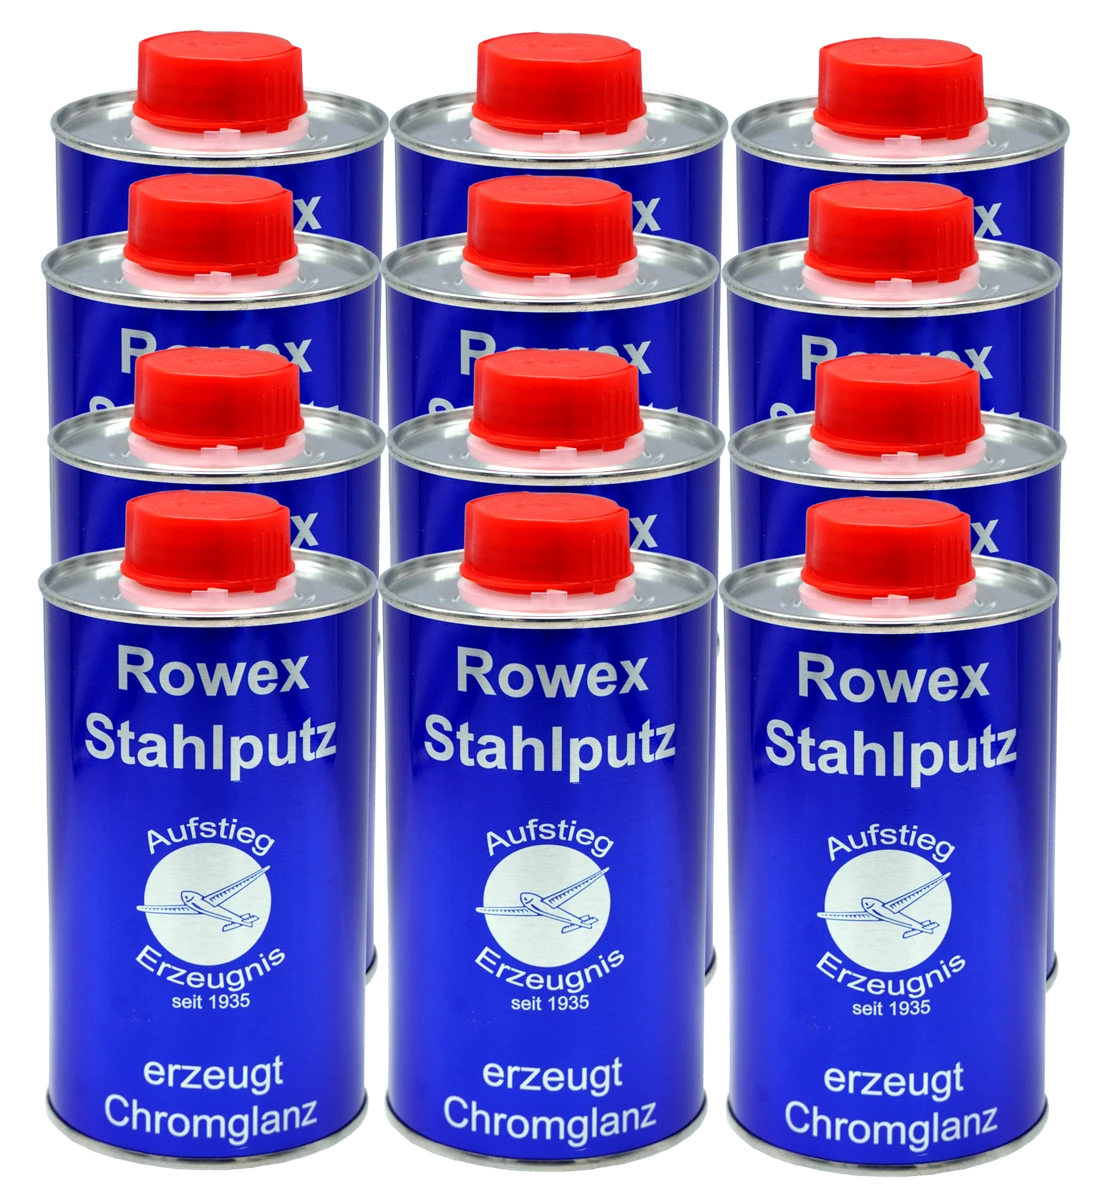 Stahlputz Rowex (12x375ml)